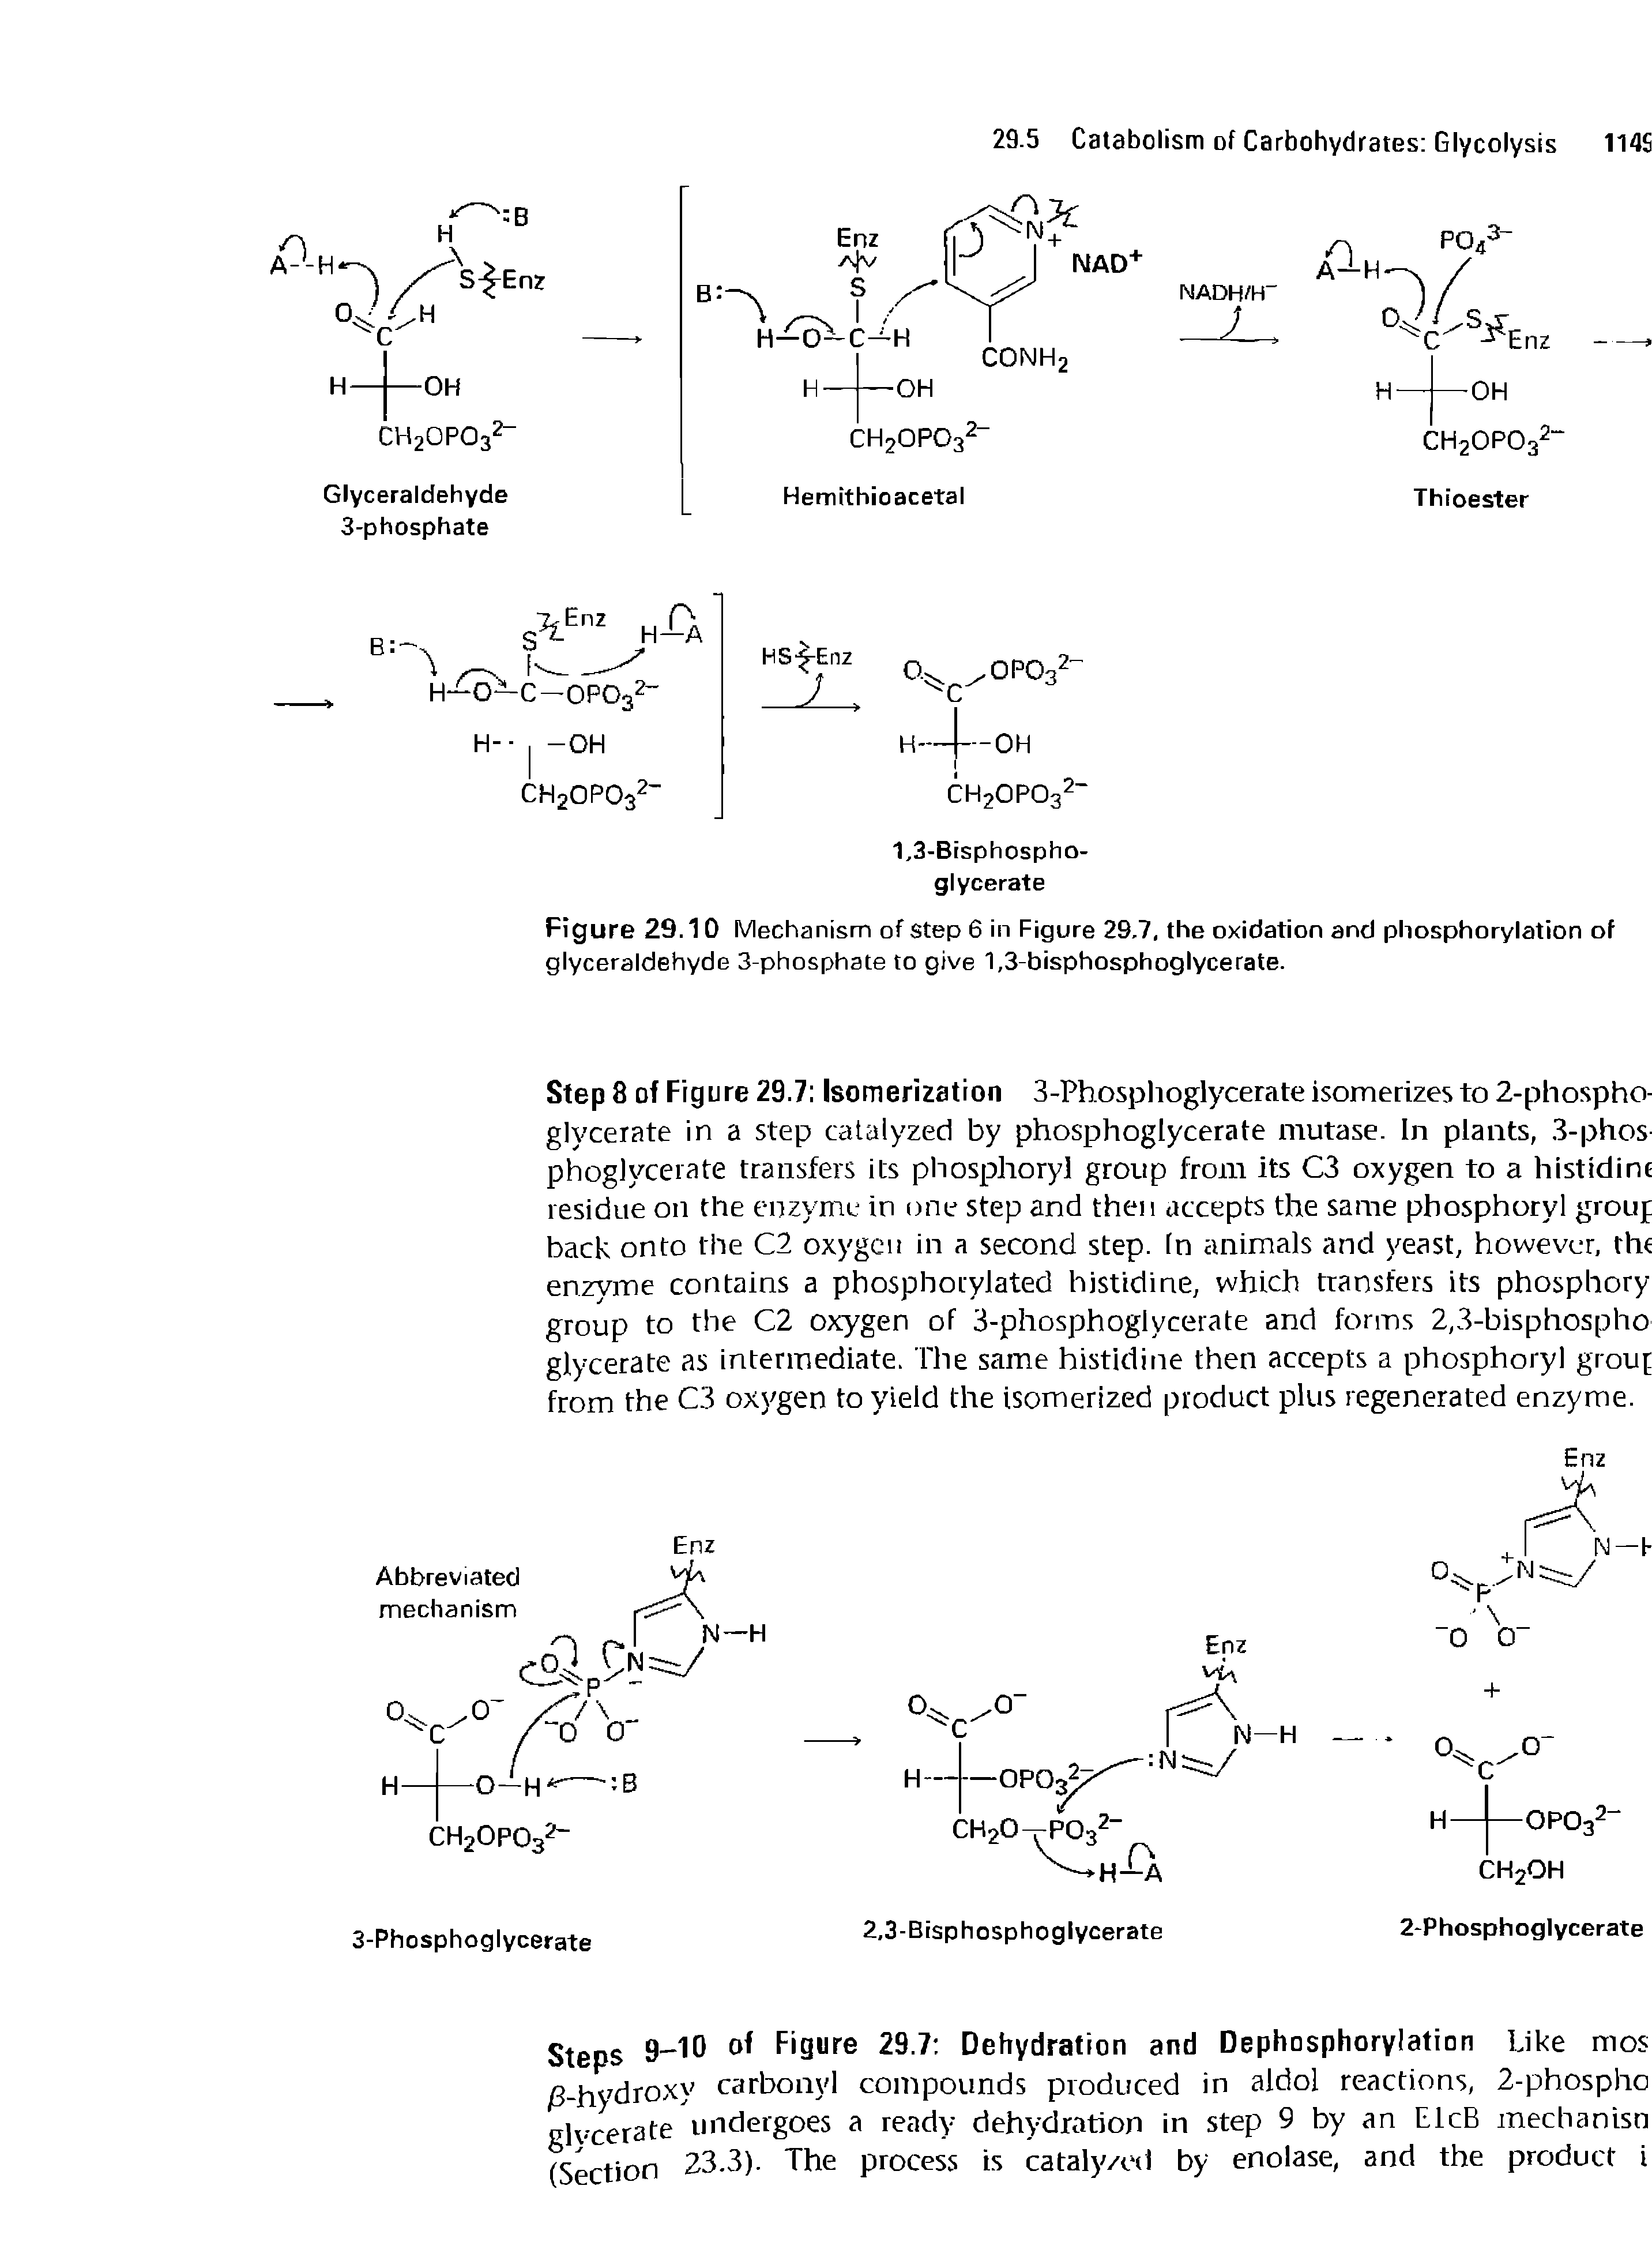 Figure 29.10 Mechanism of Step 6 in Figure 29.7, the oxidation and phosphorylation of glyceraldehyde 3-phosphate to give 1,3-bisphosphoglycerate.